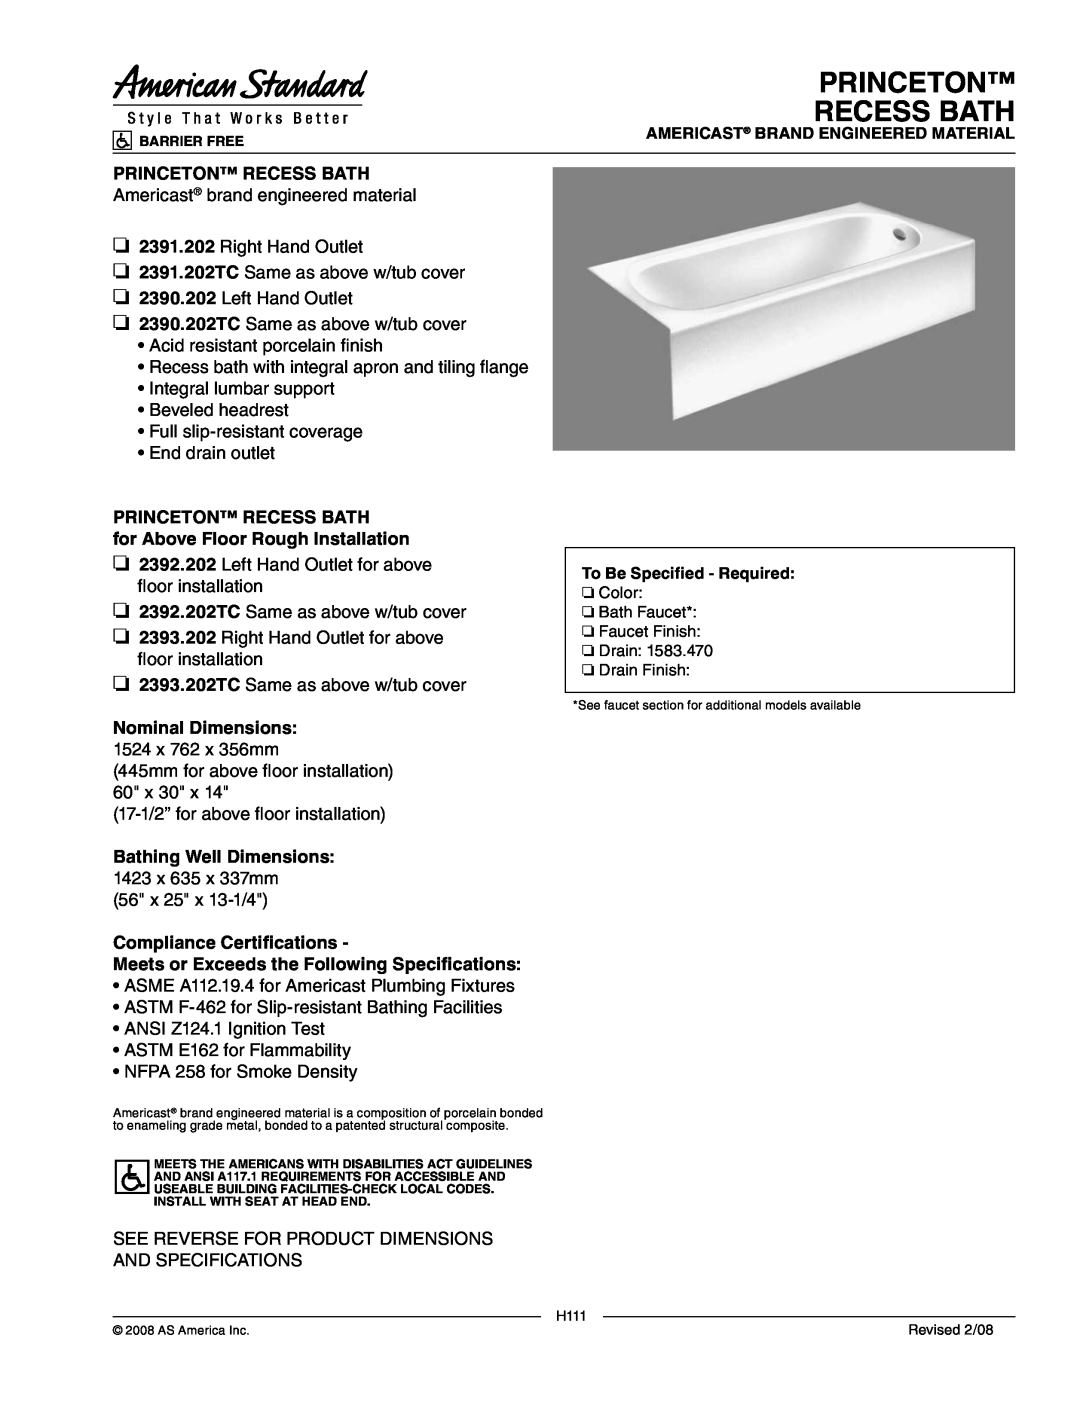 American Standard 2392.202TC dimensions Princeton Recess Bath, PRINCETON RECESS BATH for Above Floor Rough Installation 